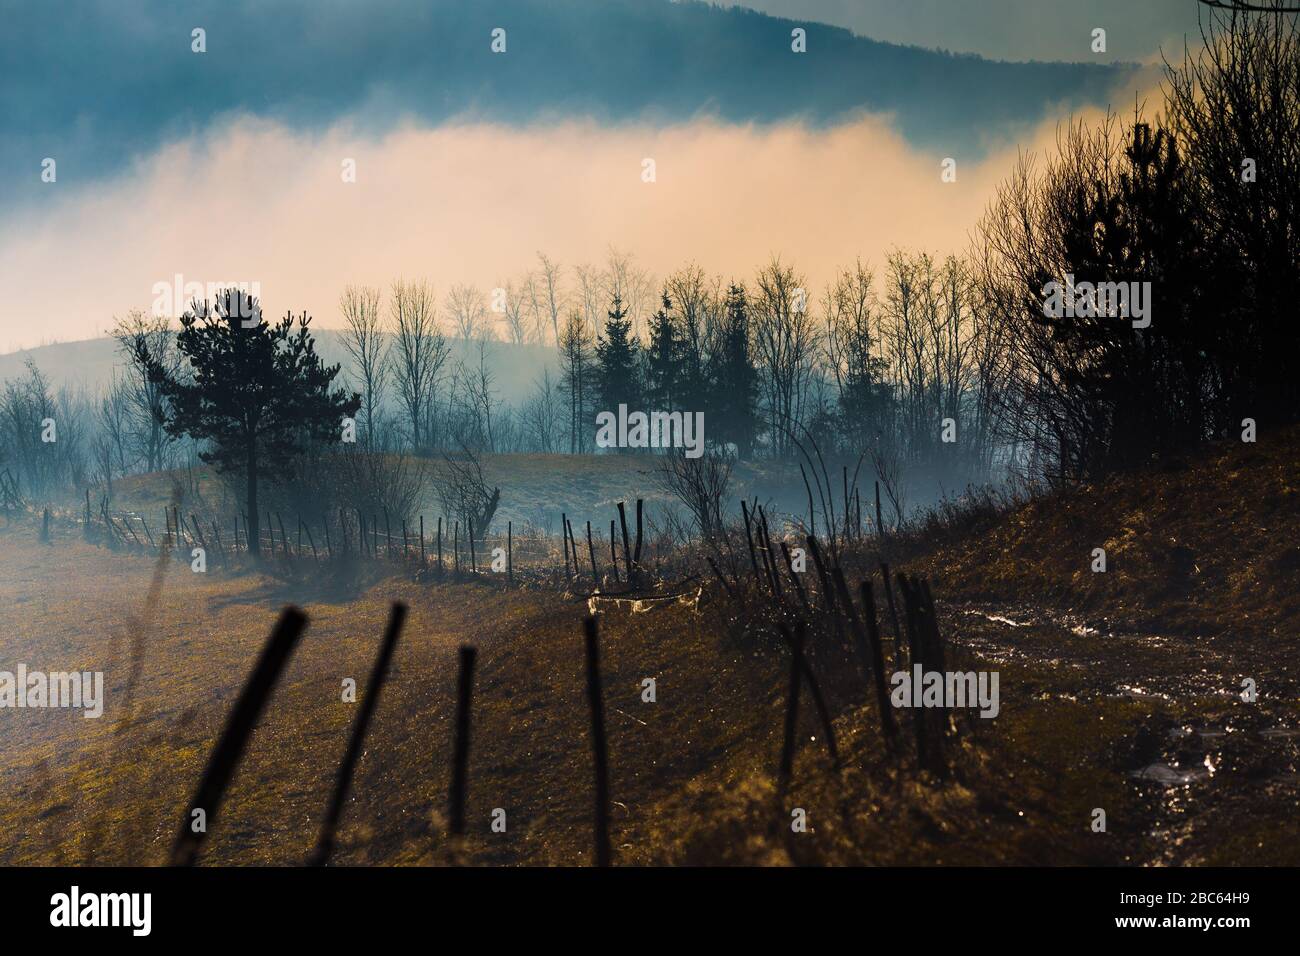 Neblige Landschaft, Straße und nahe gelegener Wald in hasiger Atmosphäre Stockfoto